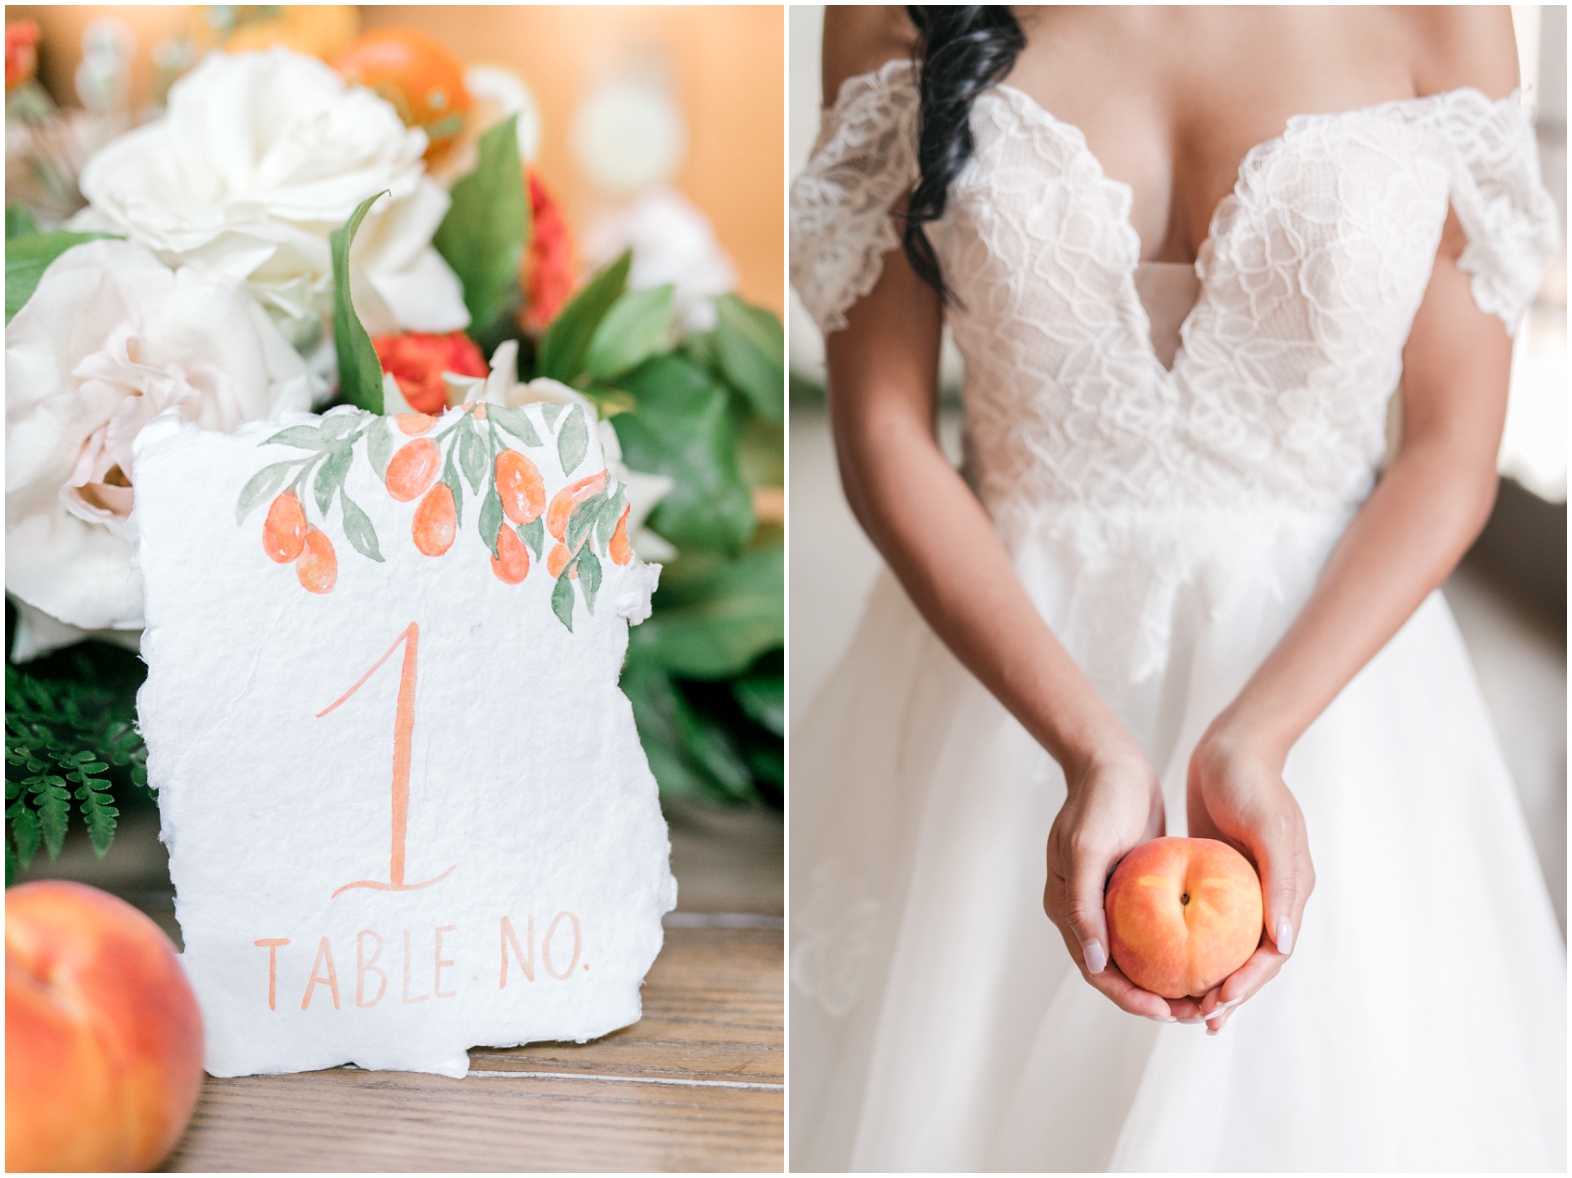 Peach themed wedding